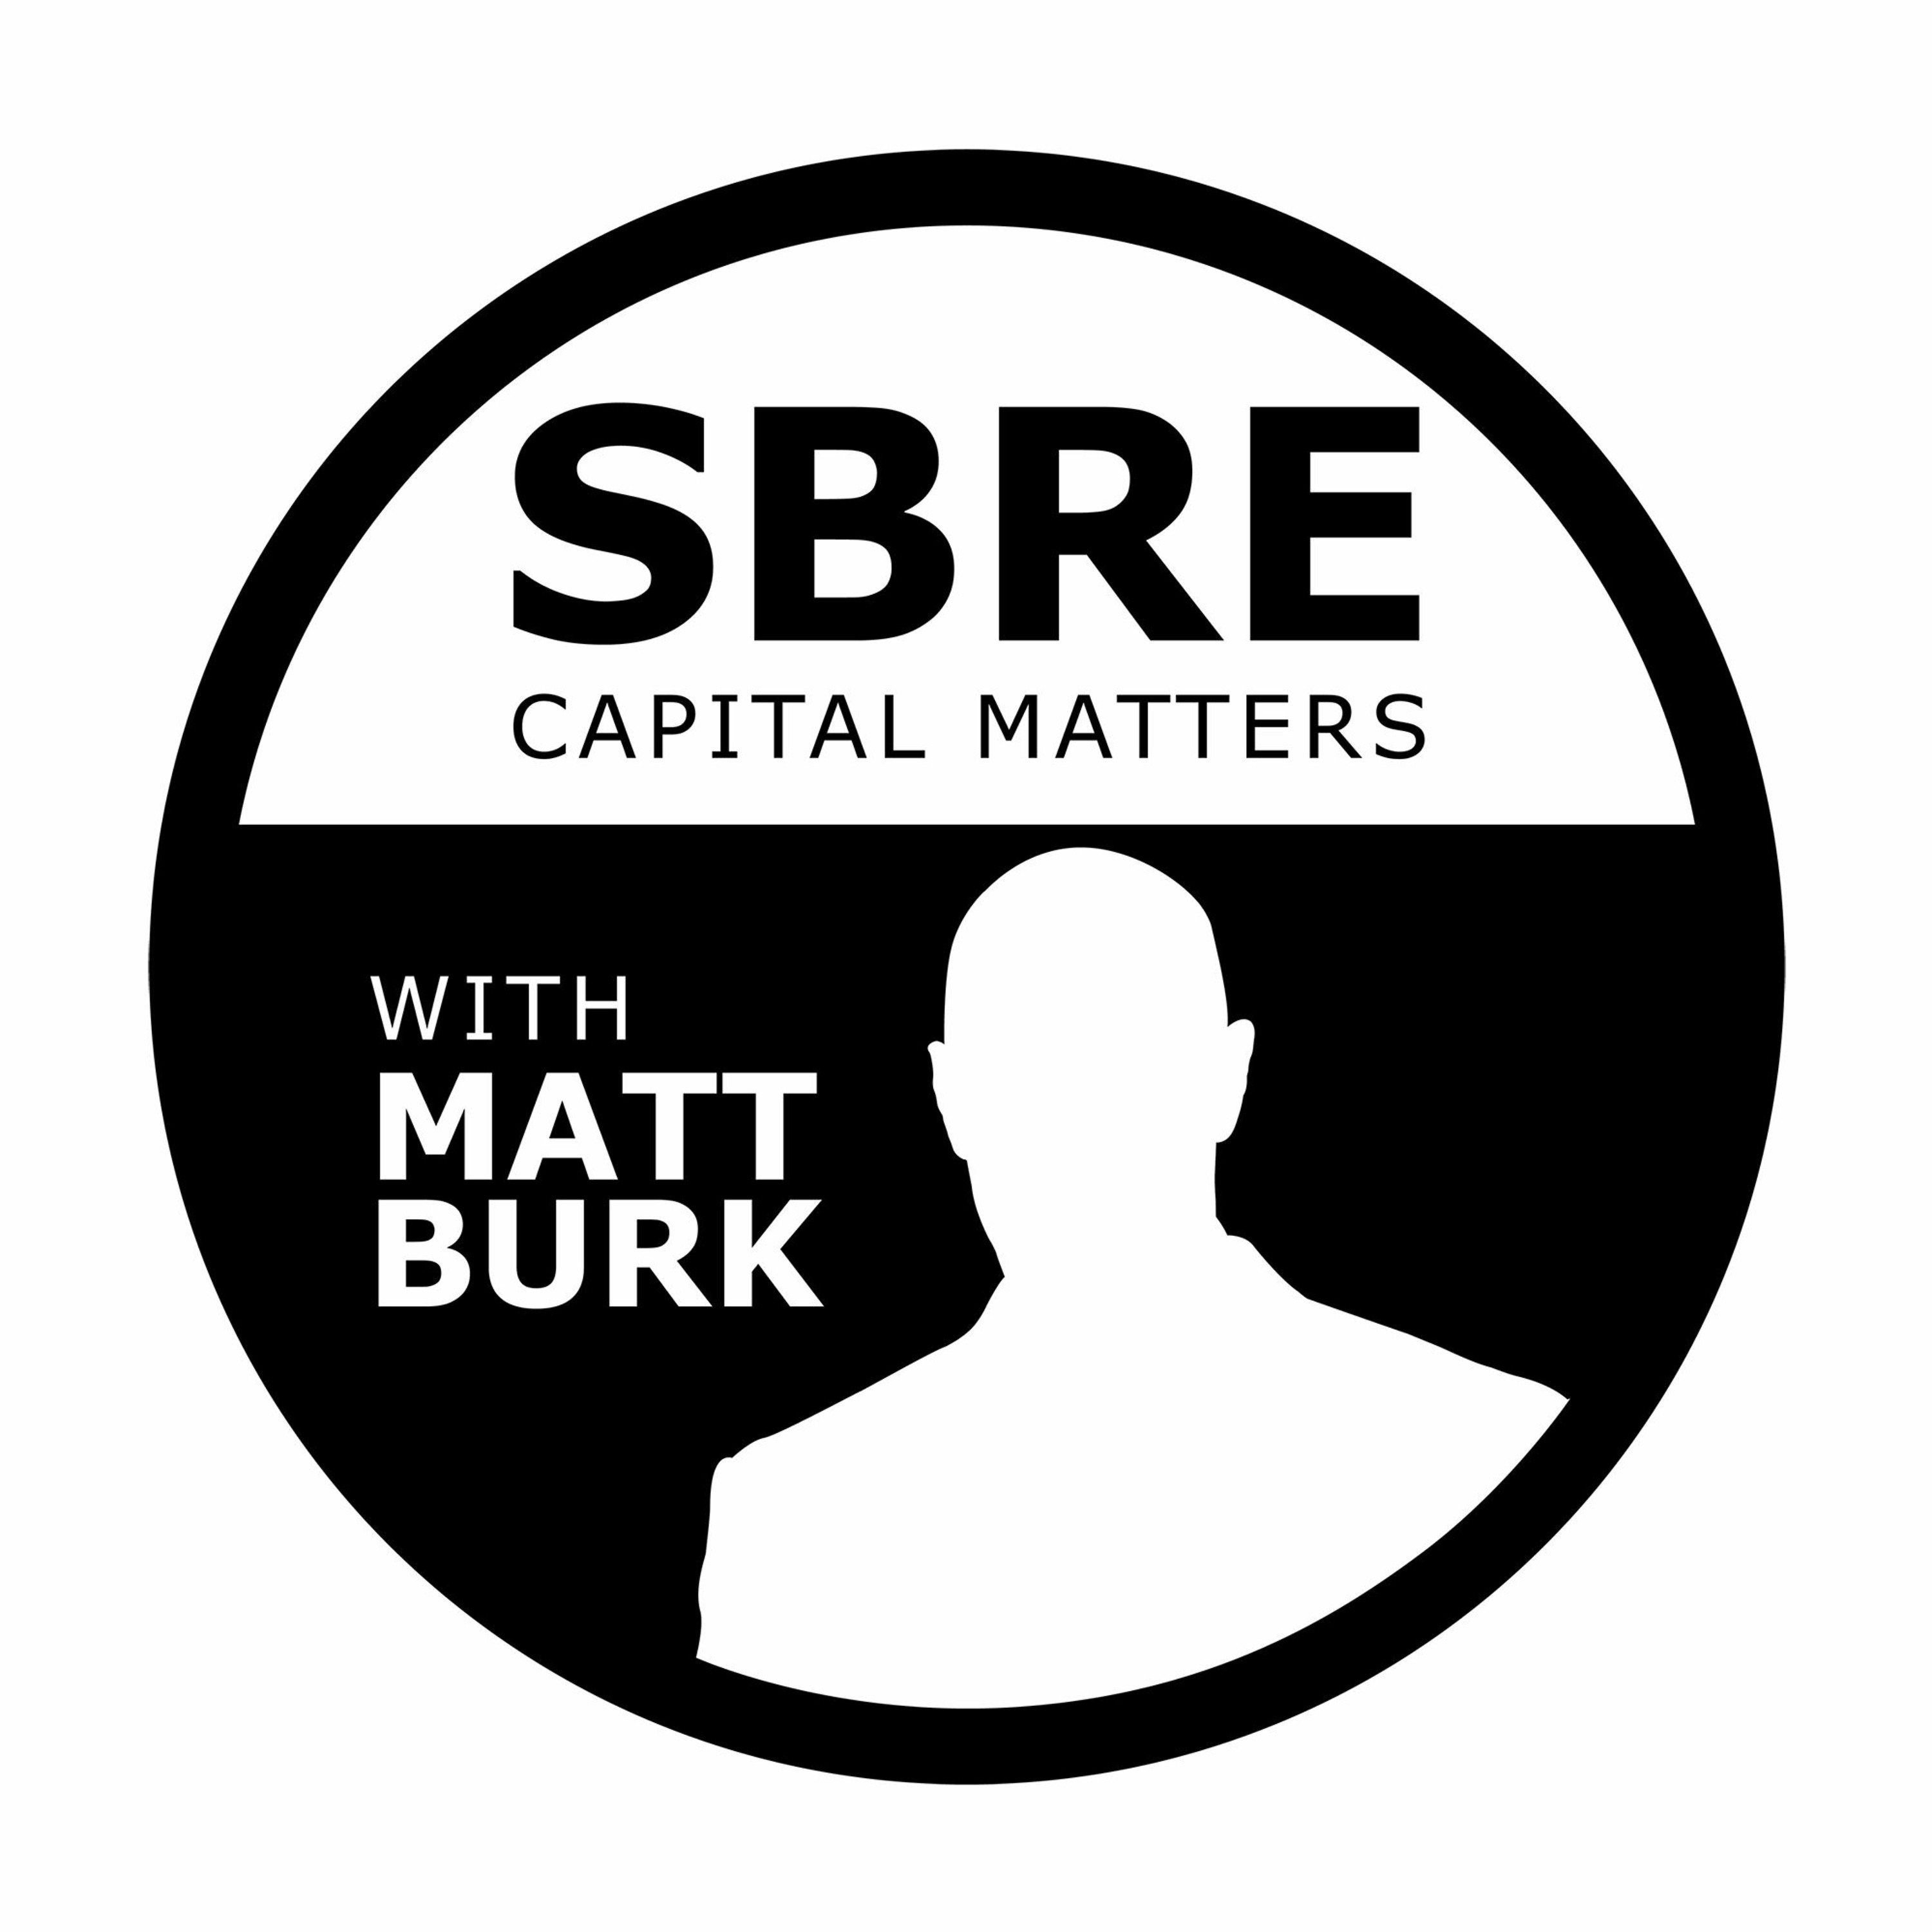 SBRE Capital Matters With Matt Burk SHOW #11 1/17/18